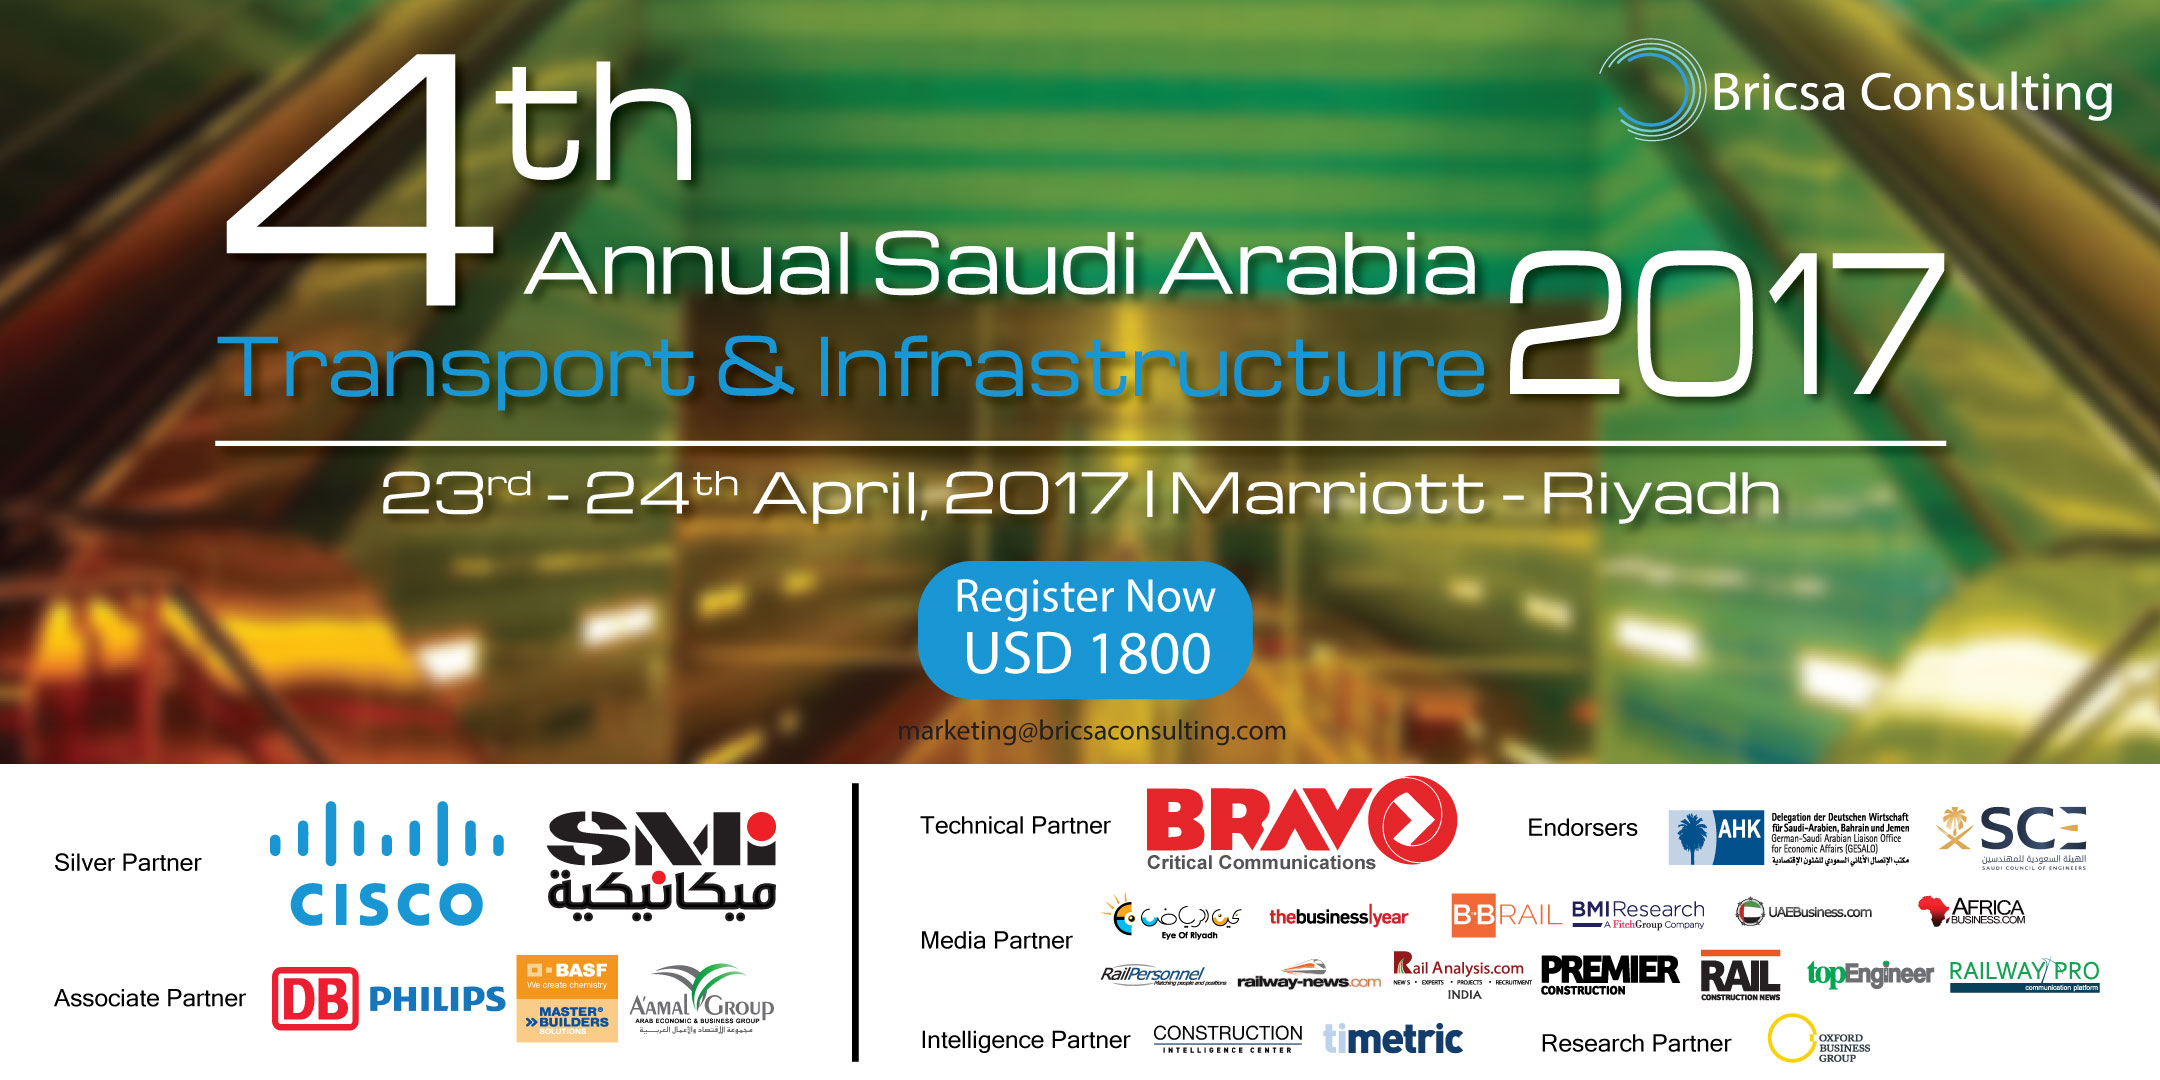 4th Annual Saudi Arabia Transport & Infrastructure 2017, Riyadh, Saudi Arabia